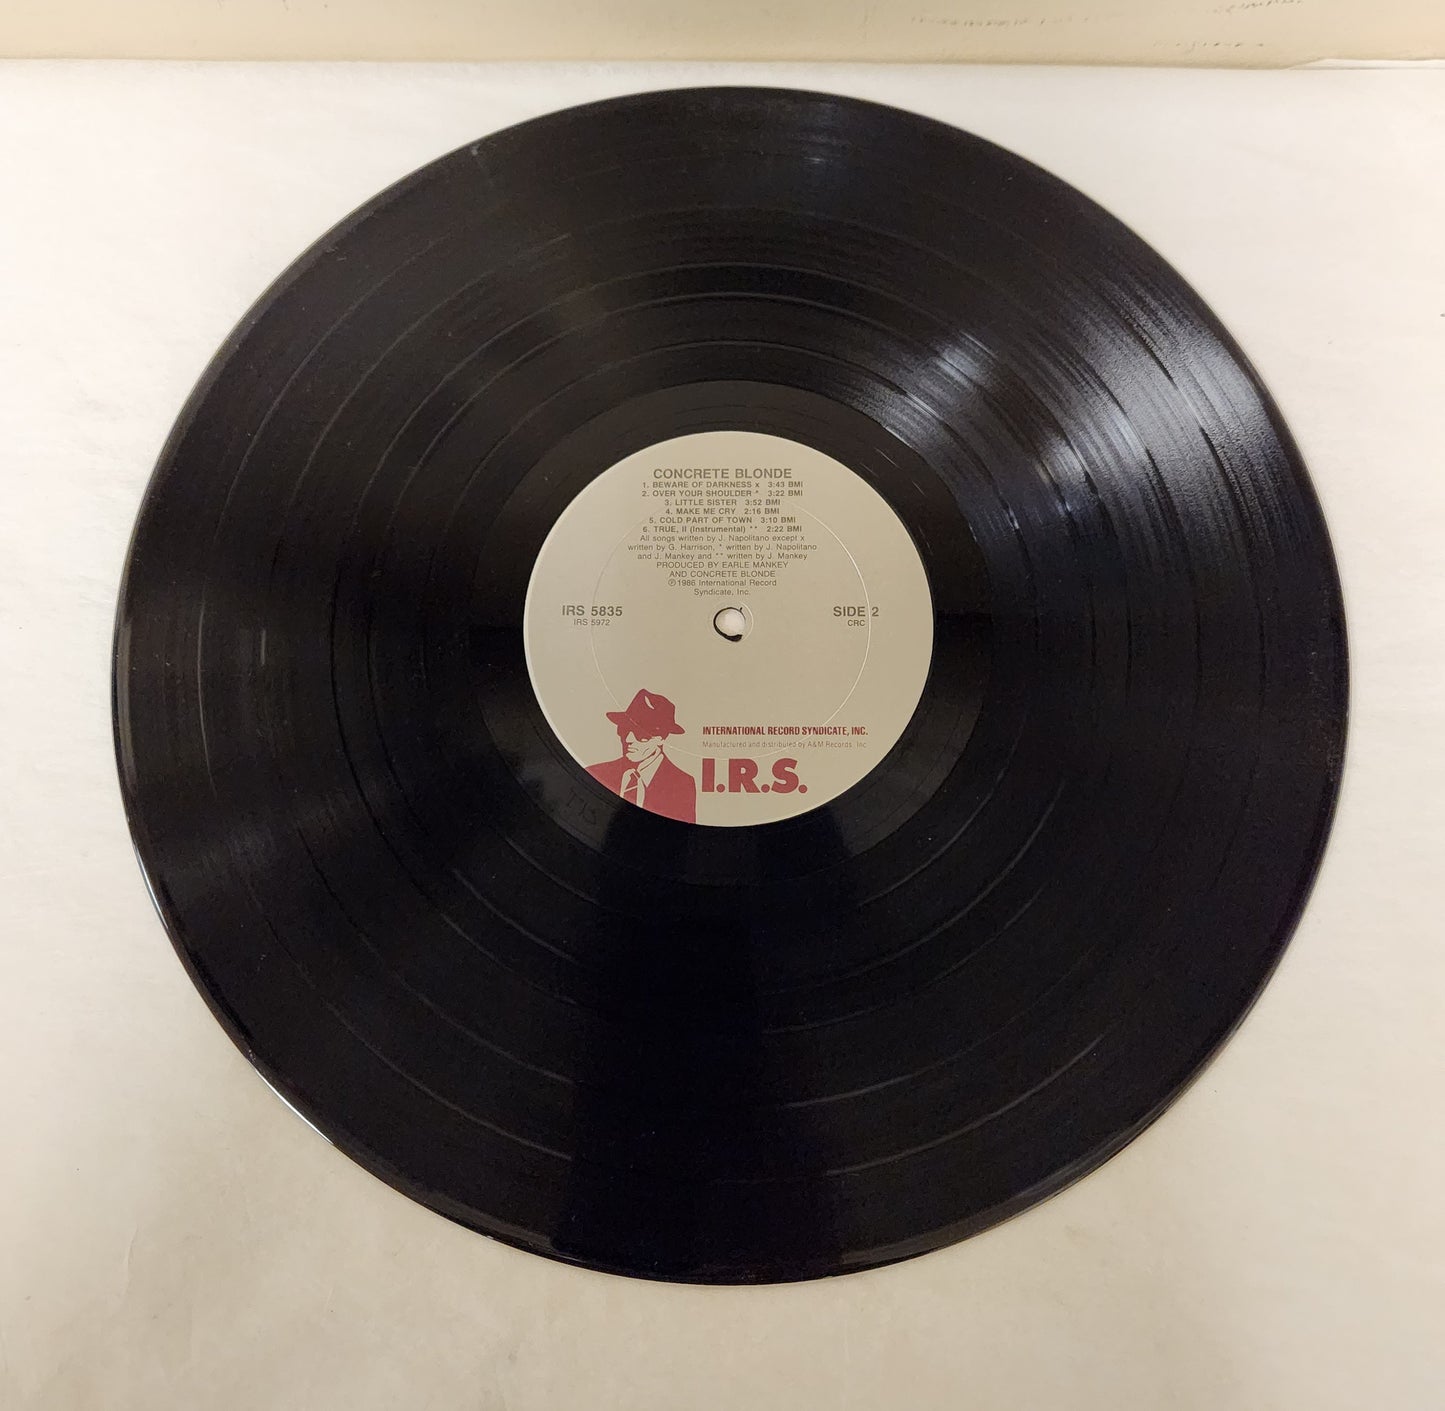 Concrete Blonde Self-Titled 1986 Alt Rock Record Album